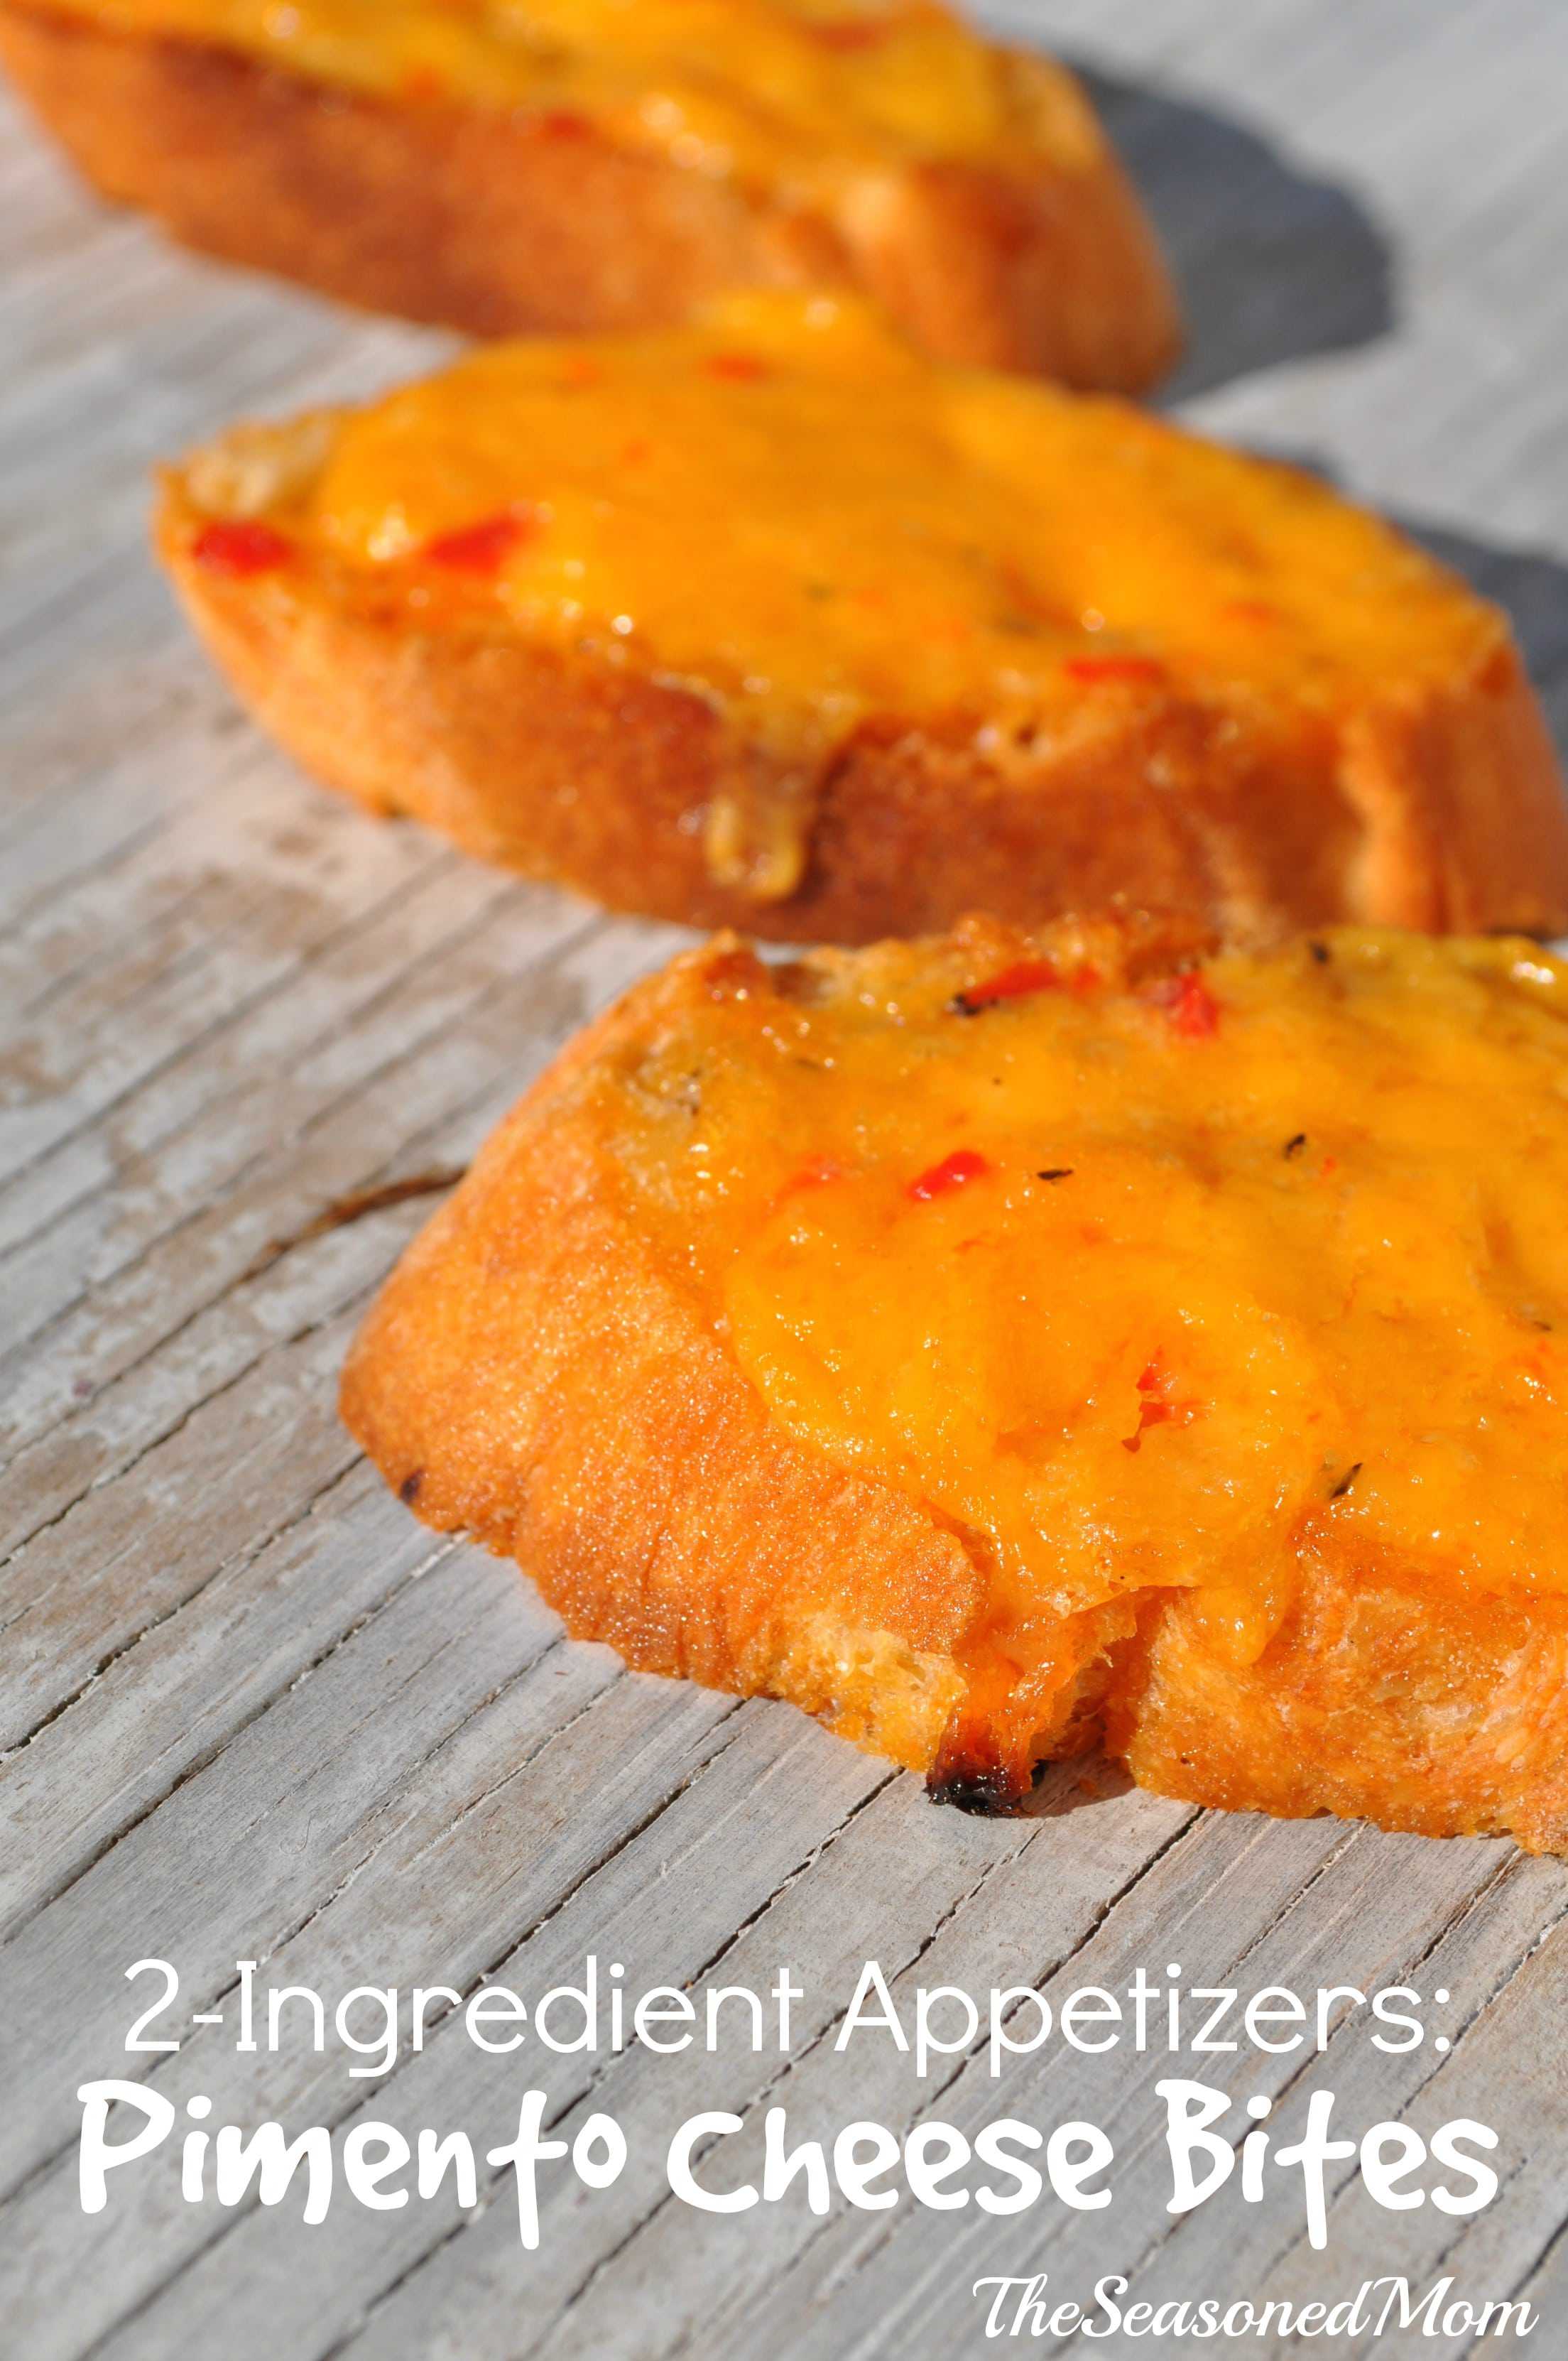 2-Ingredient Appetizer: Kerrin's Pimento Cheese Bites - The Seasoned Mom